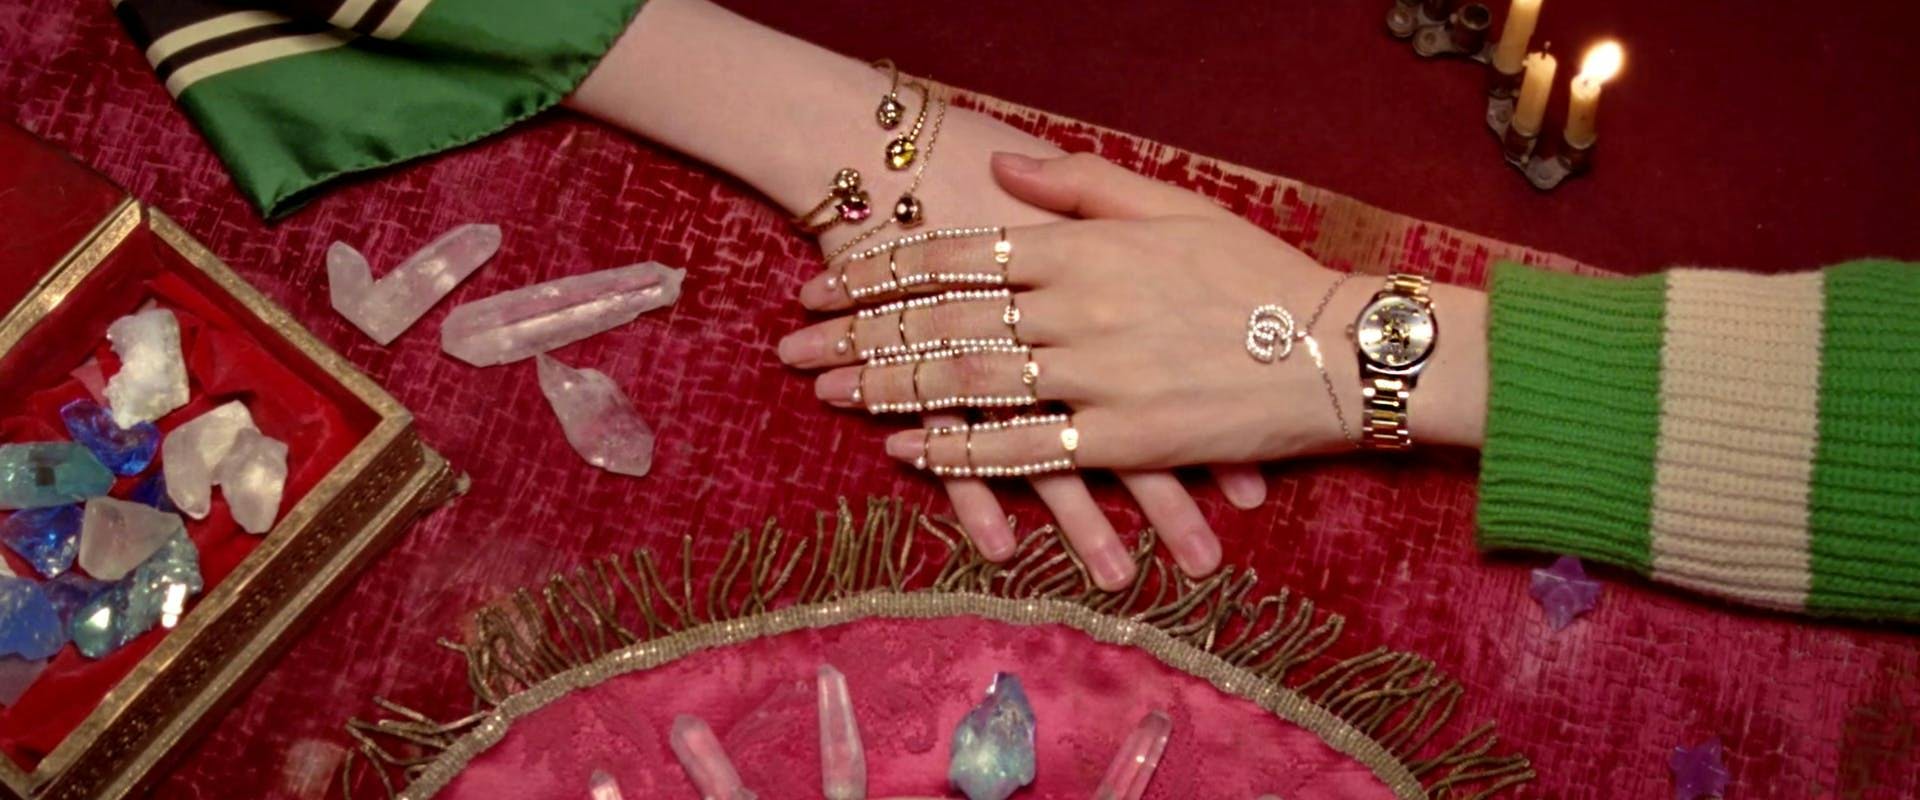 wristwatch jewelry accessories accessory crystal hand